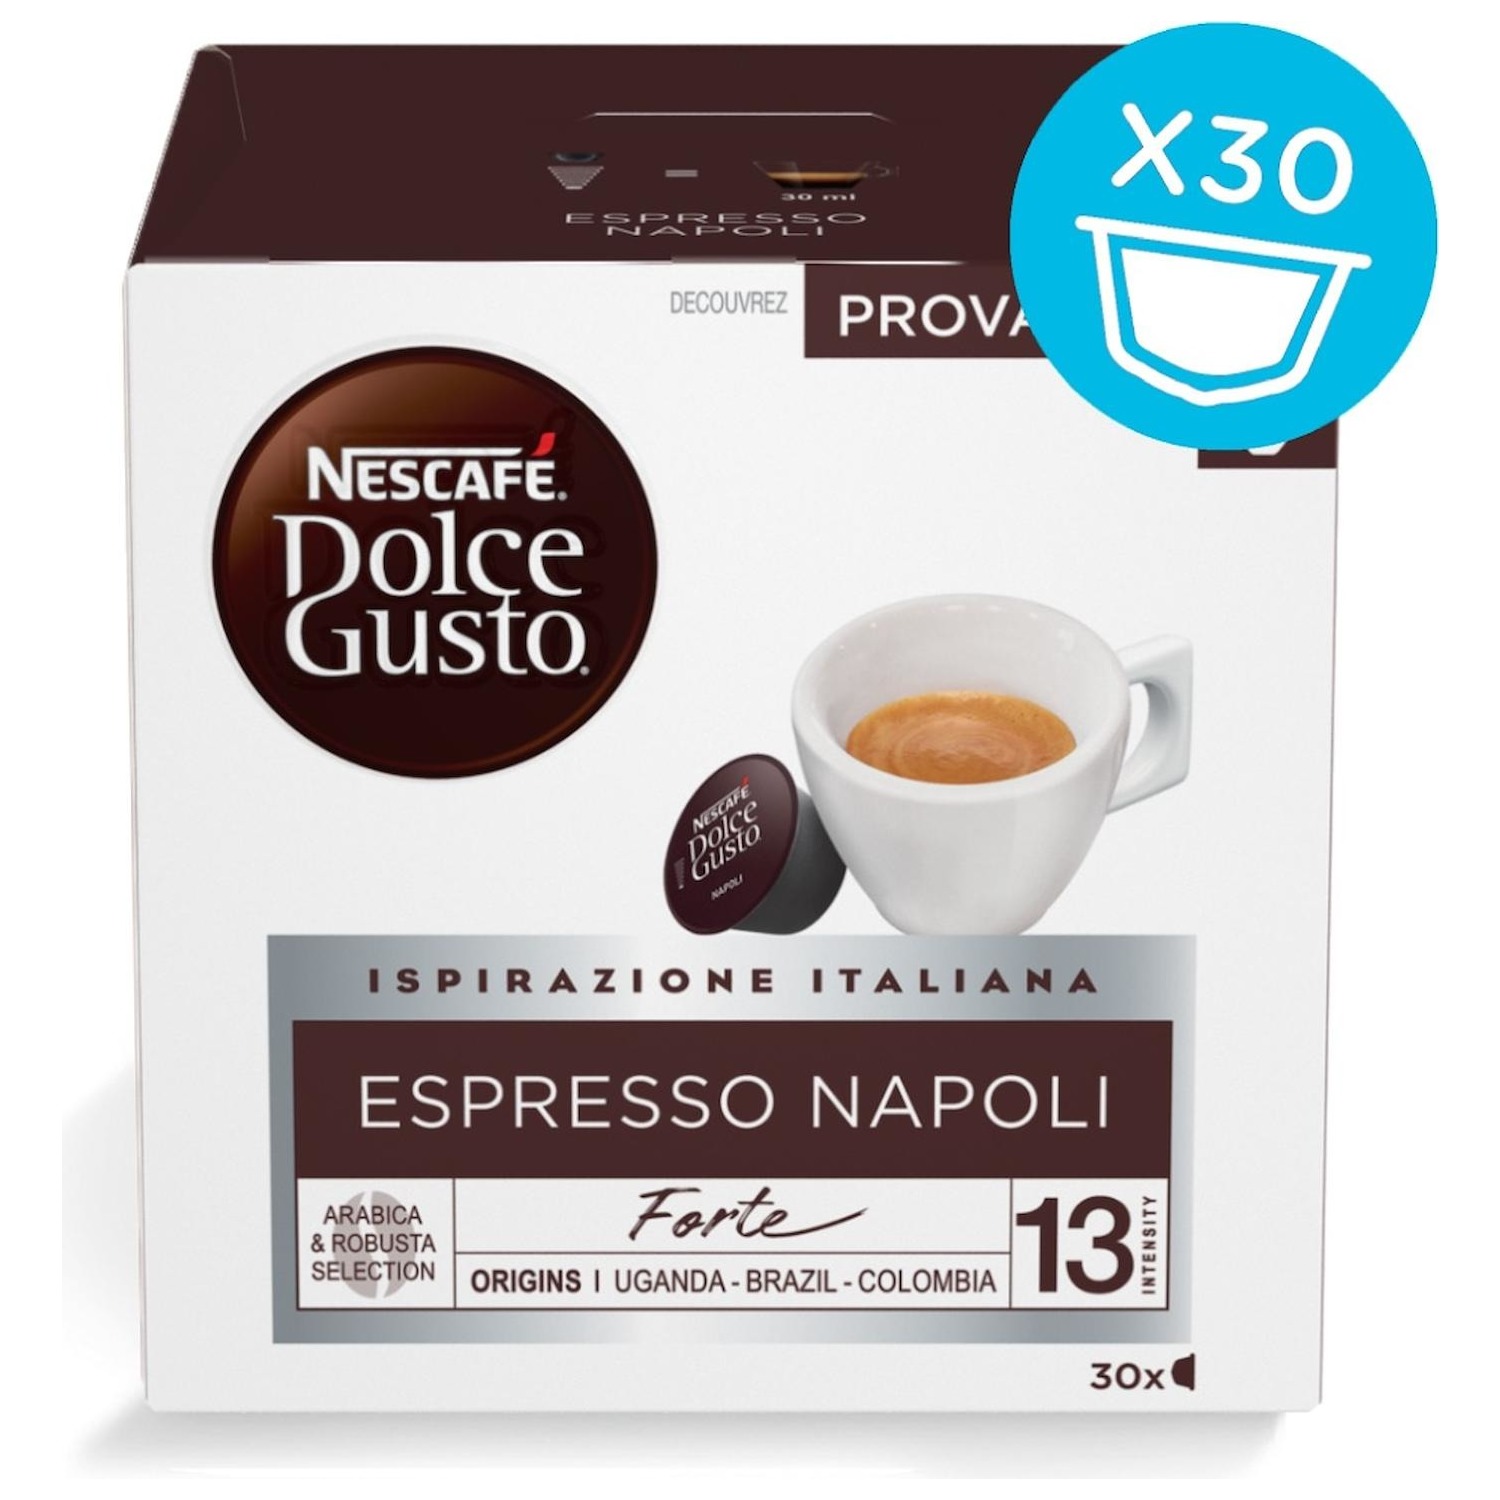 Capsule Caffe Dolce Gusto Espresso Napoli Magnumpack 30 capsule